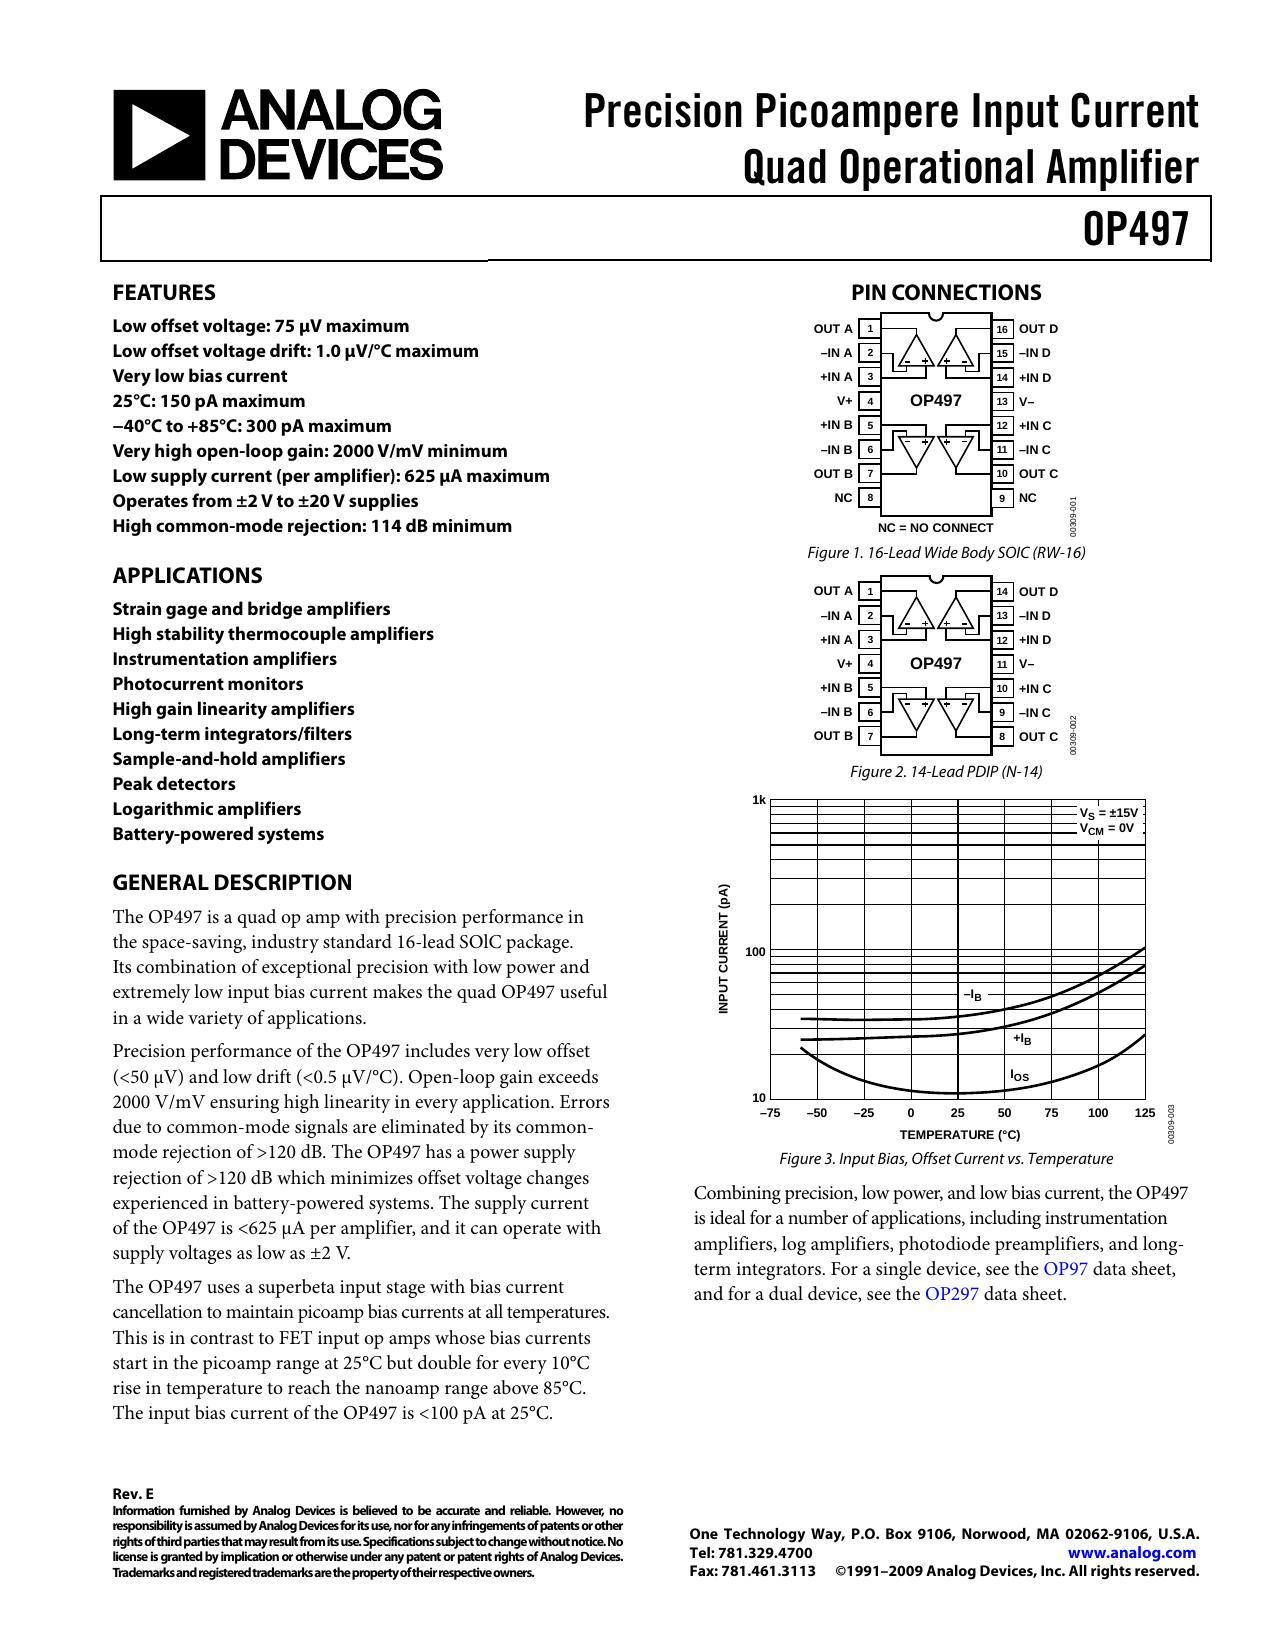 op497-precision-picoampere-input-current-quad-operational-amplifier.pdf